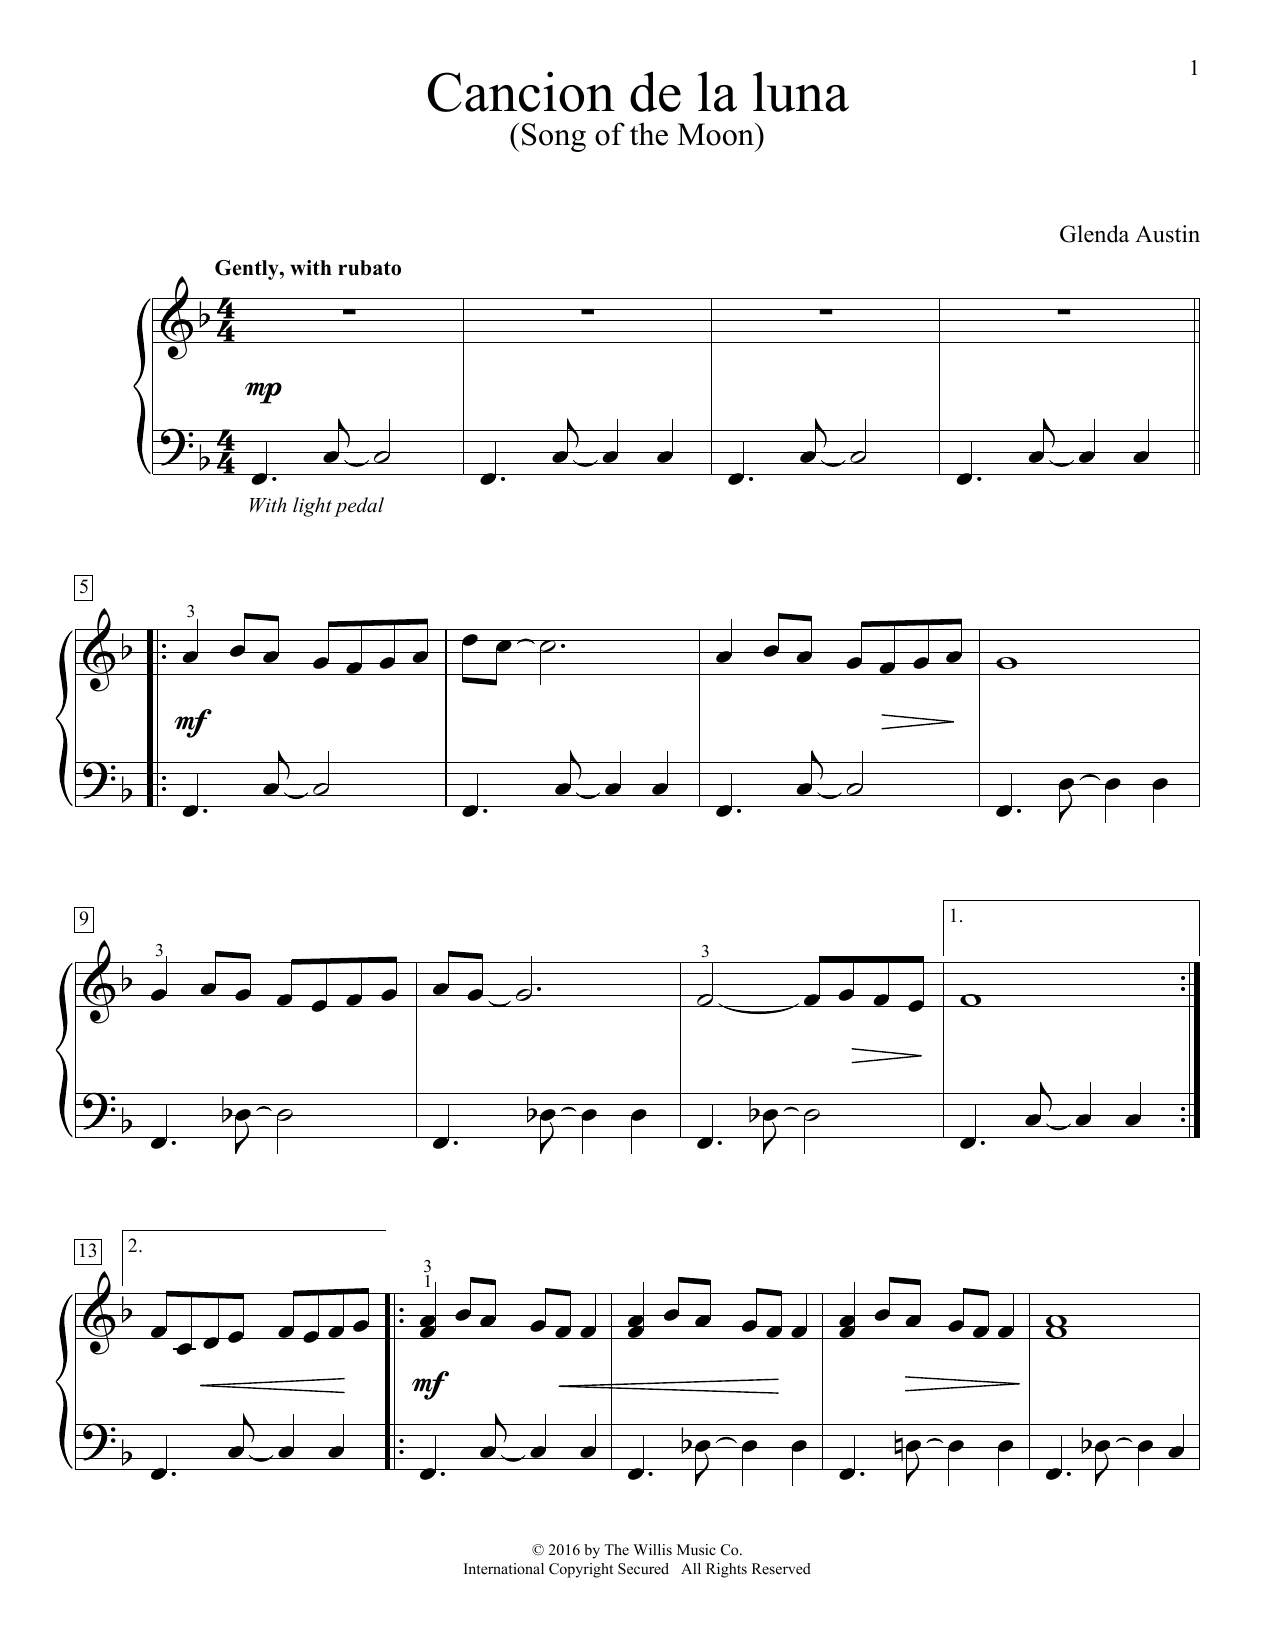 Glenda Austin Cancion De La Luna Sheet Music Notes & Chords for Piano - Download or Print PDF